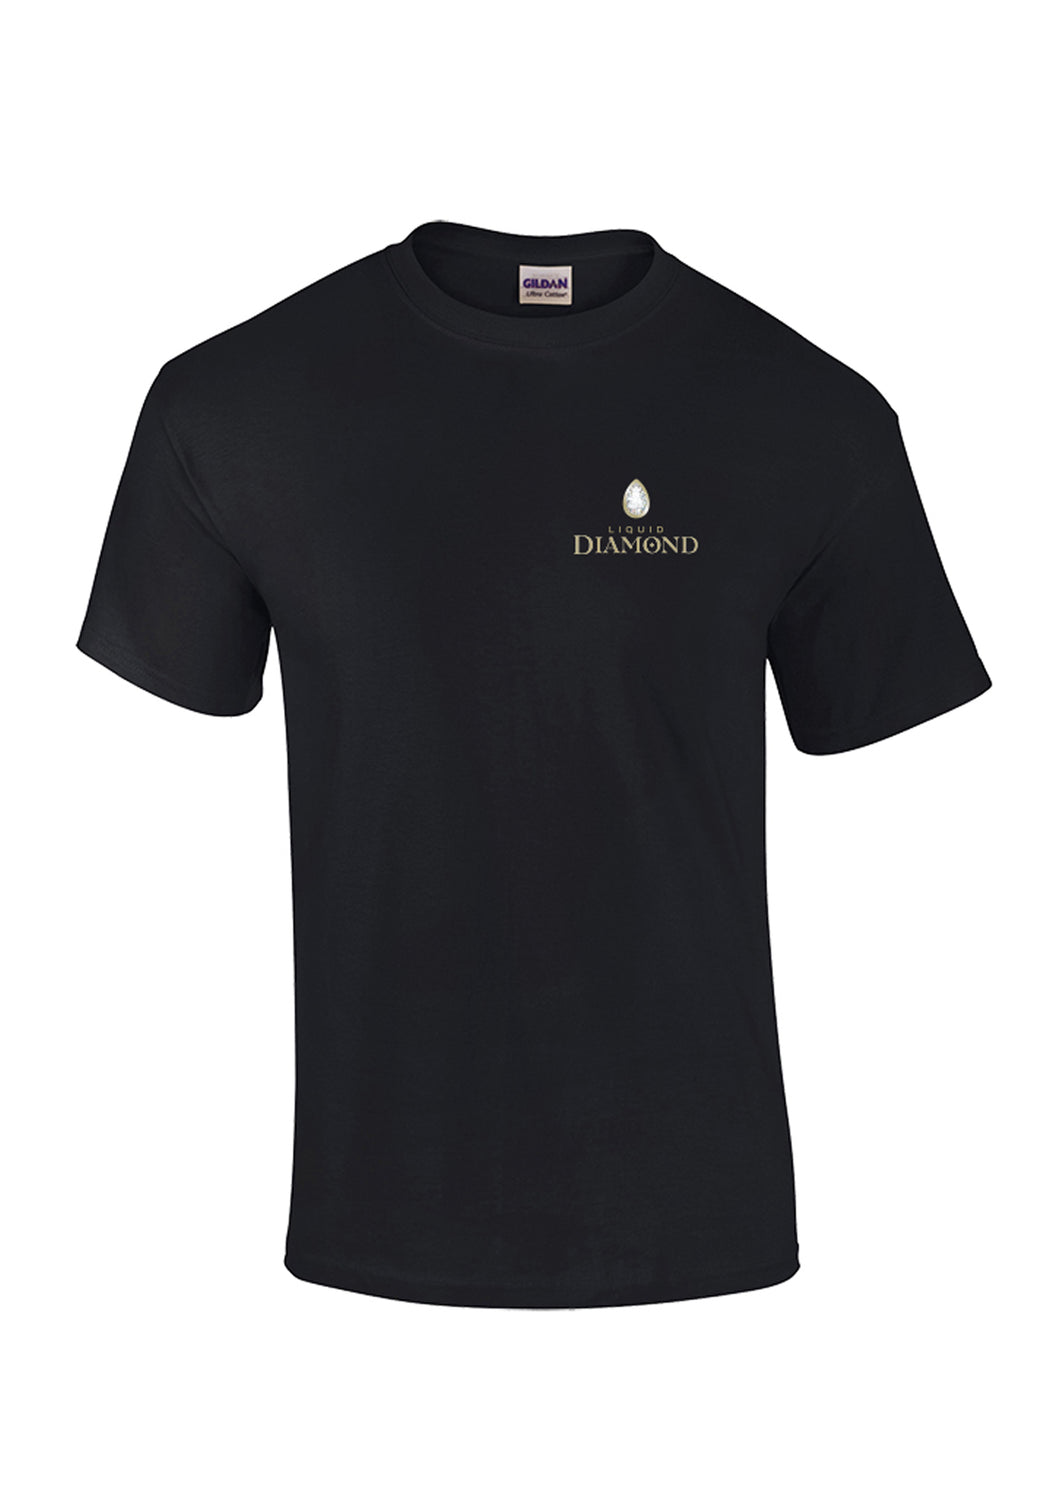 Liquid Diamond T-Shirt - Black with Gold Logo